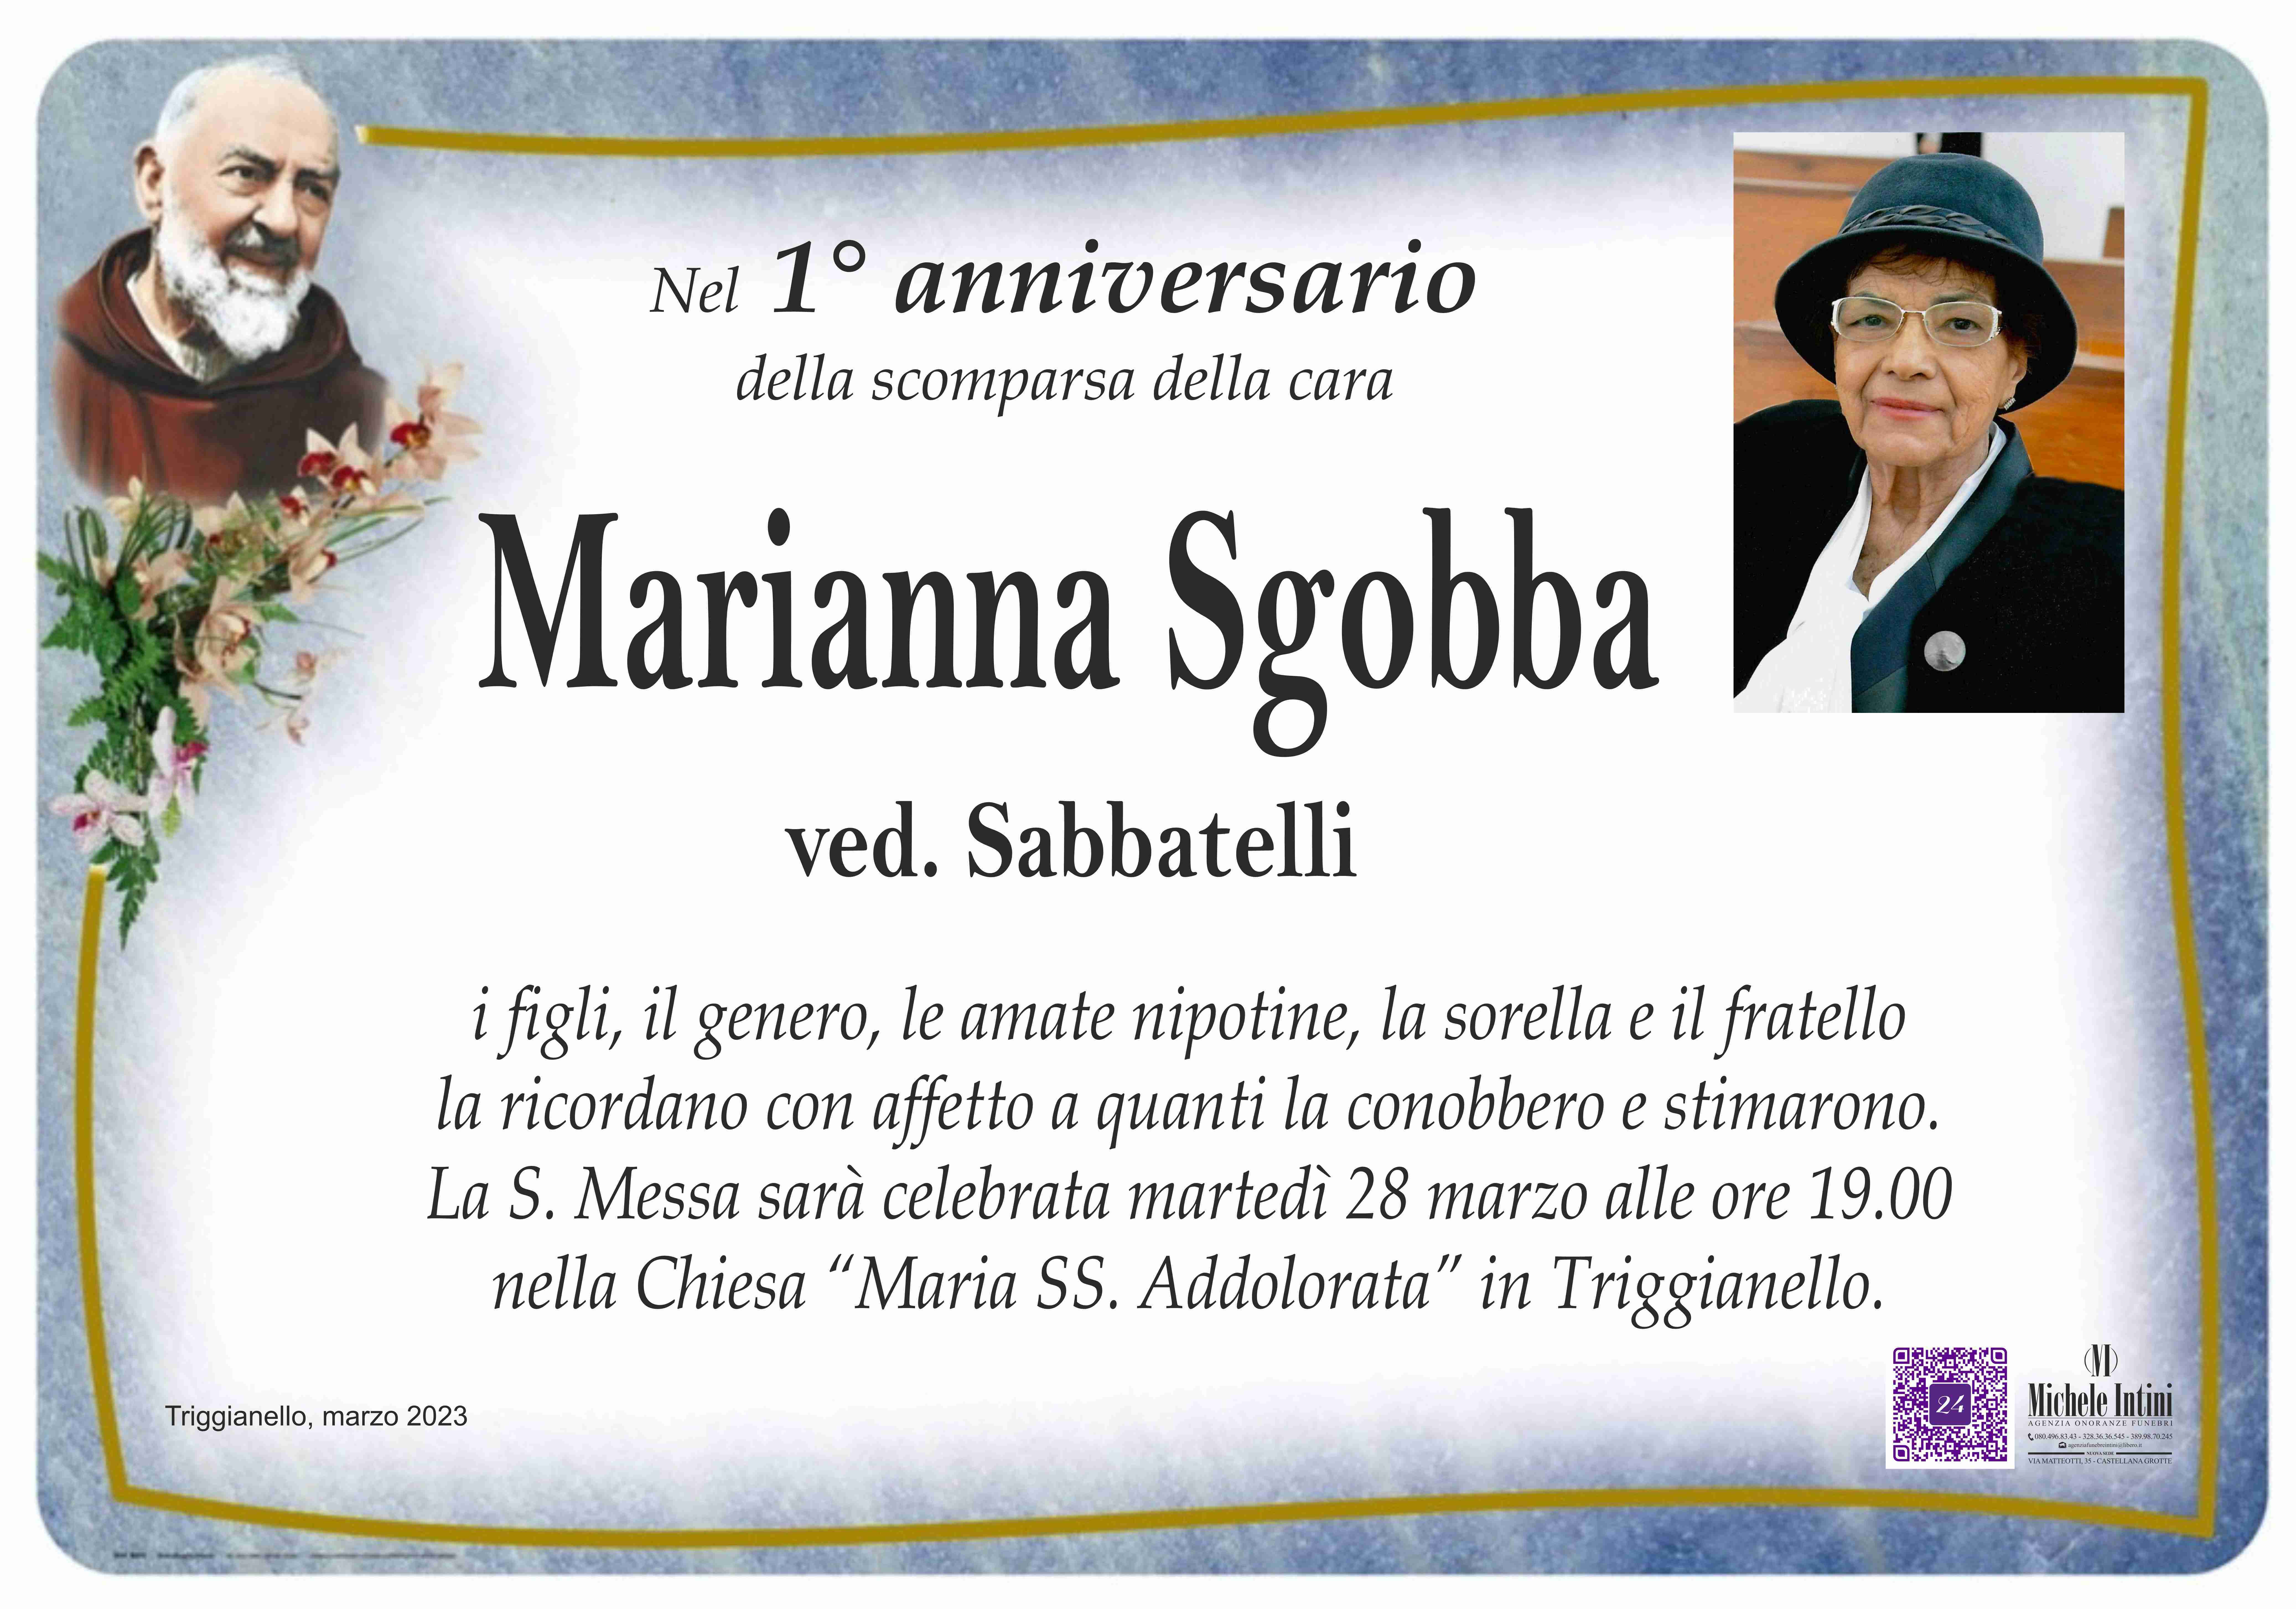 Marianna Sgobba